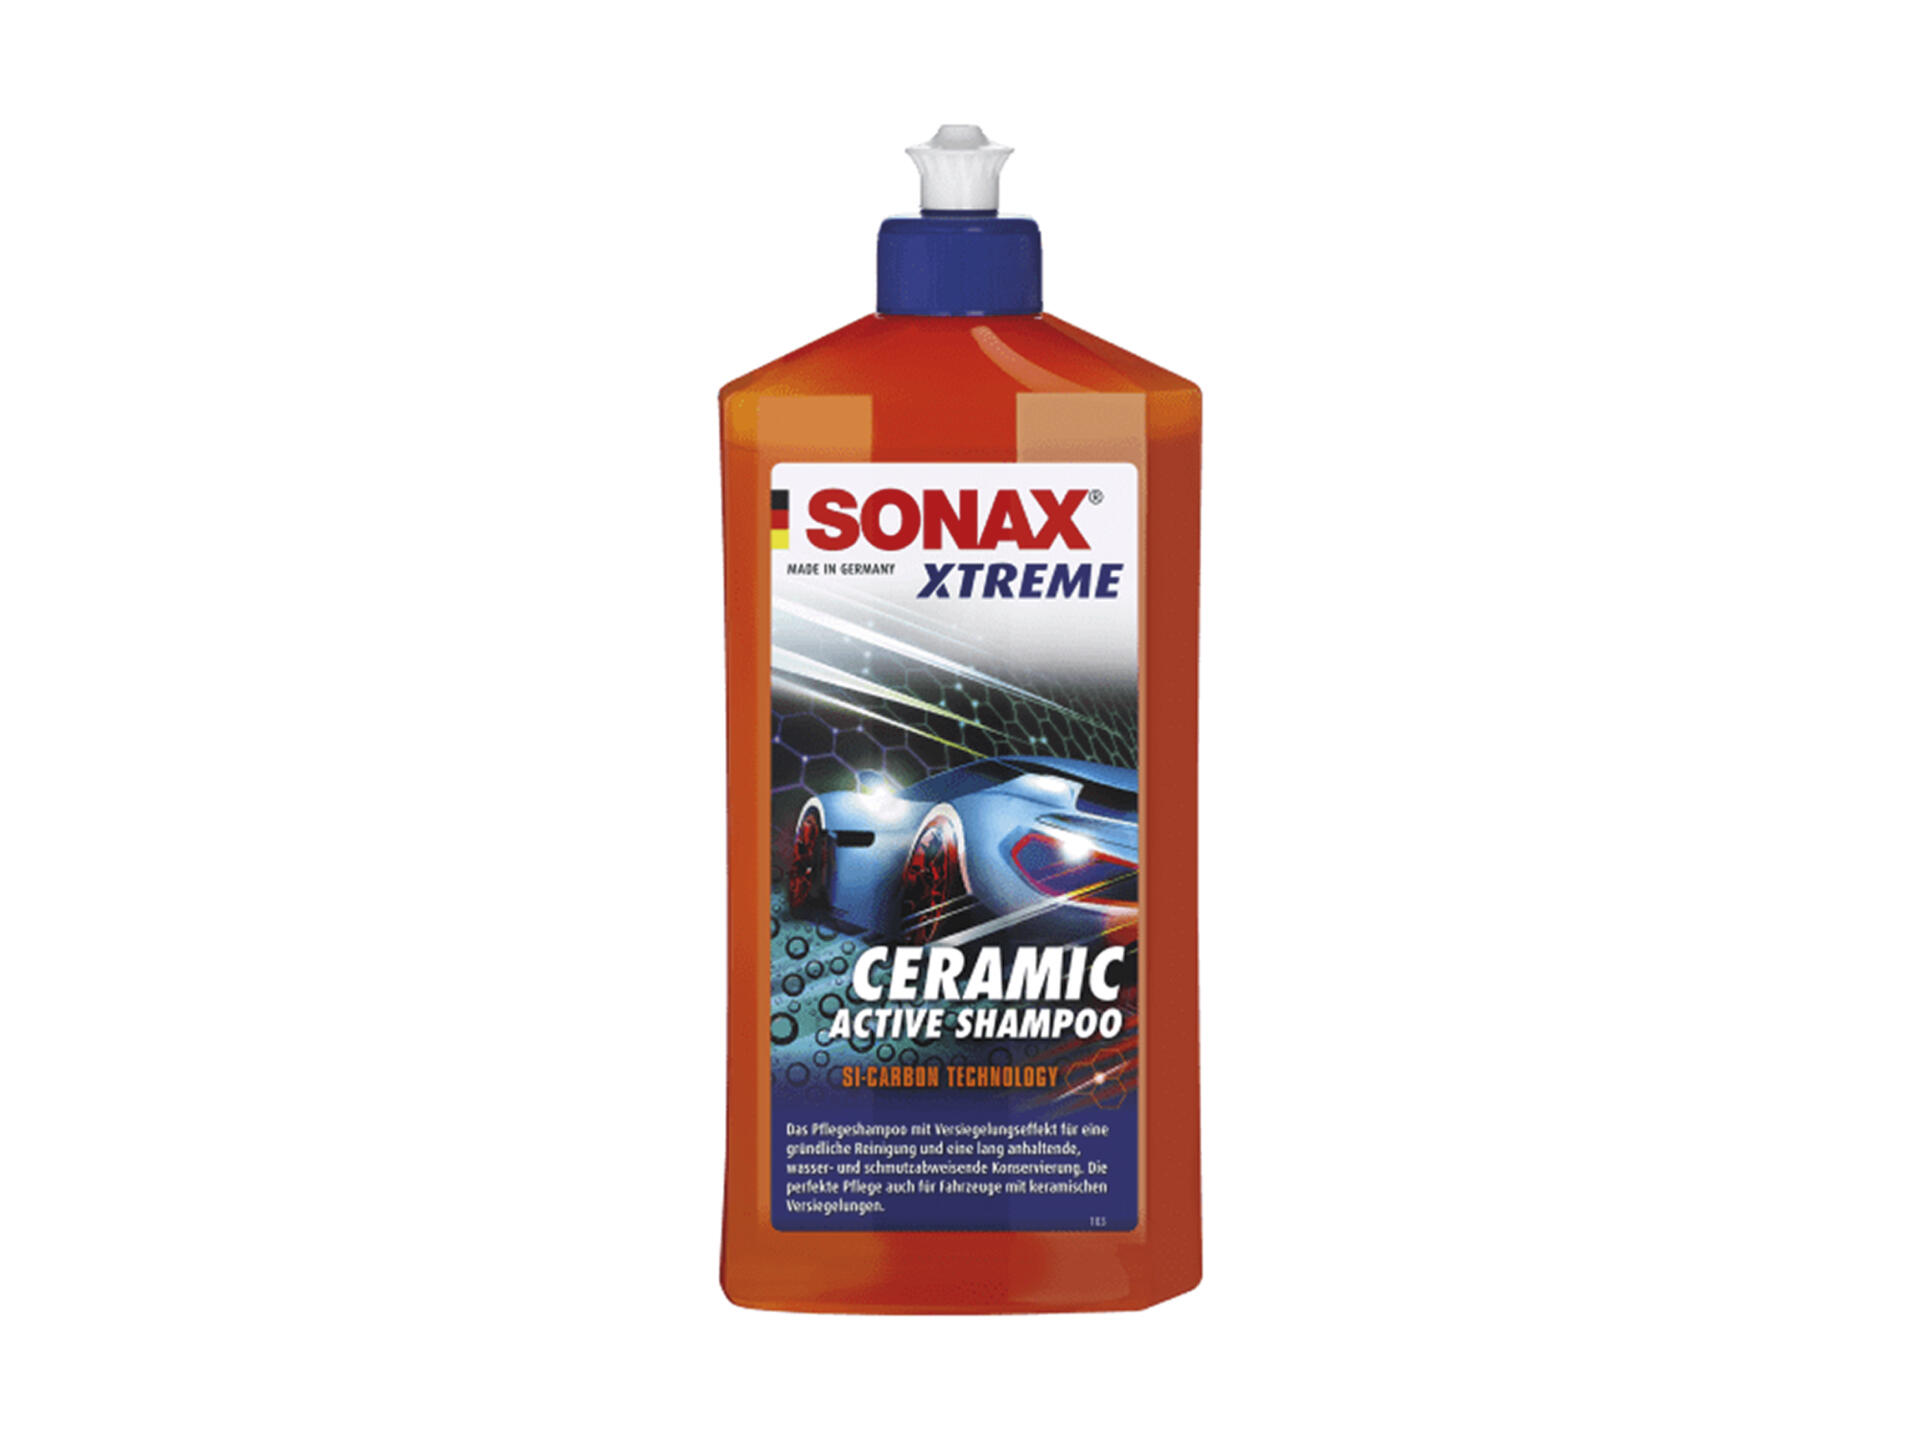 Sonax shampooing actif céramique 500ml